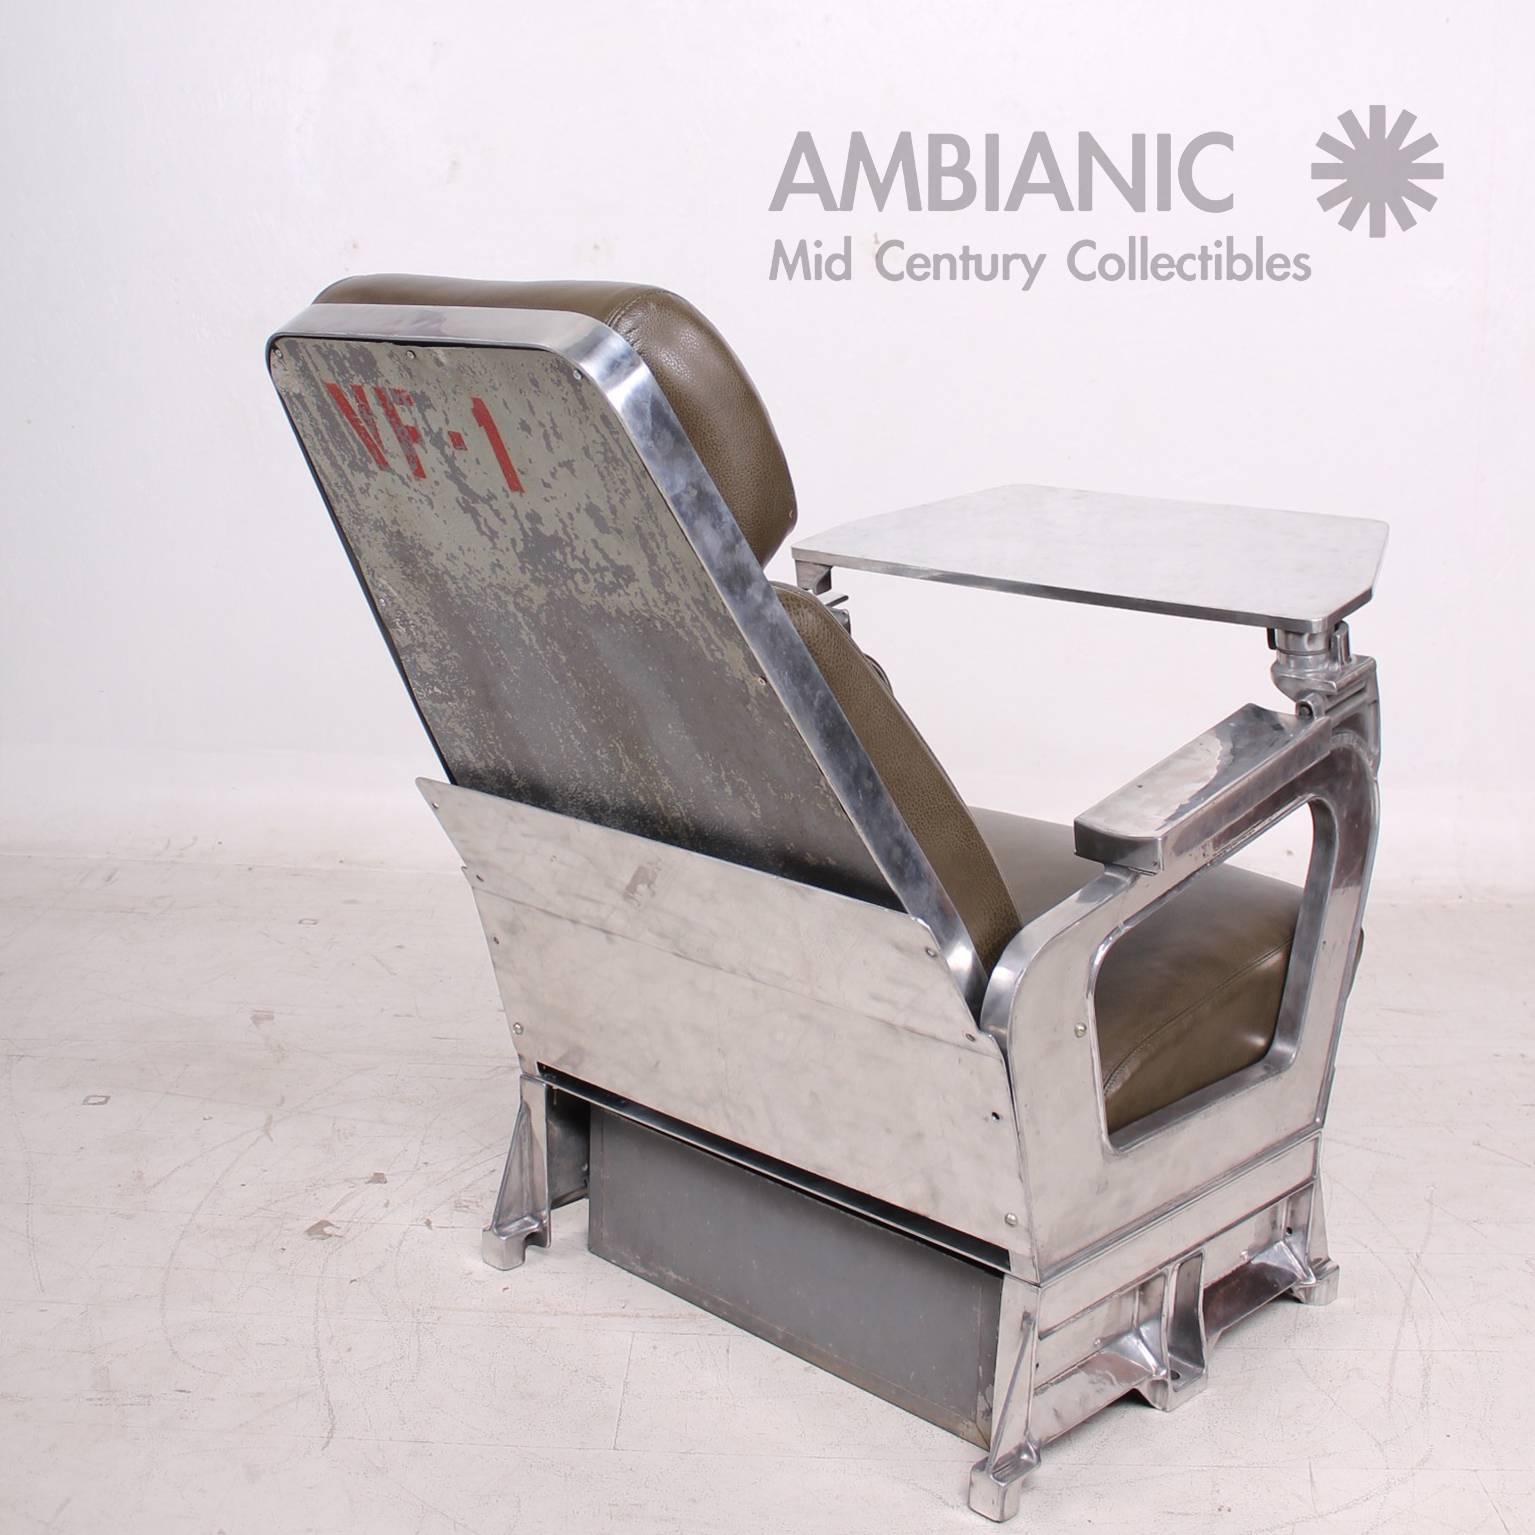 Mid-Century Modern Aluminum Airplane Chair 2